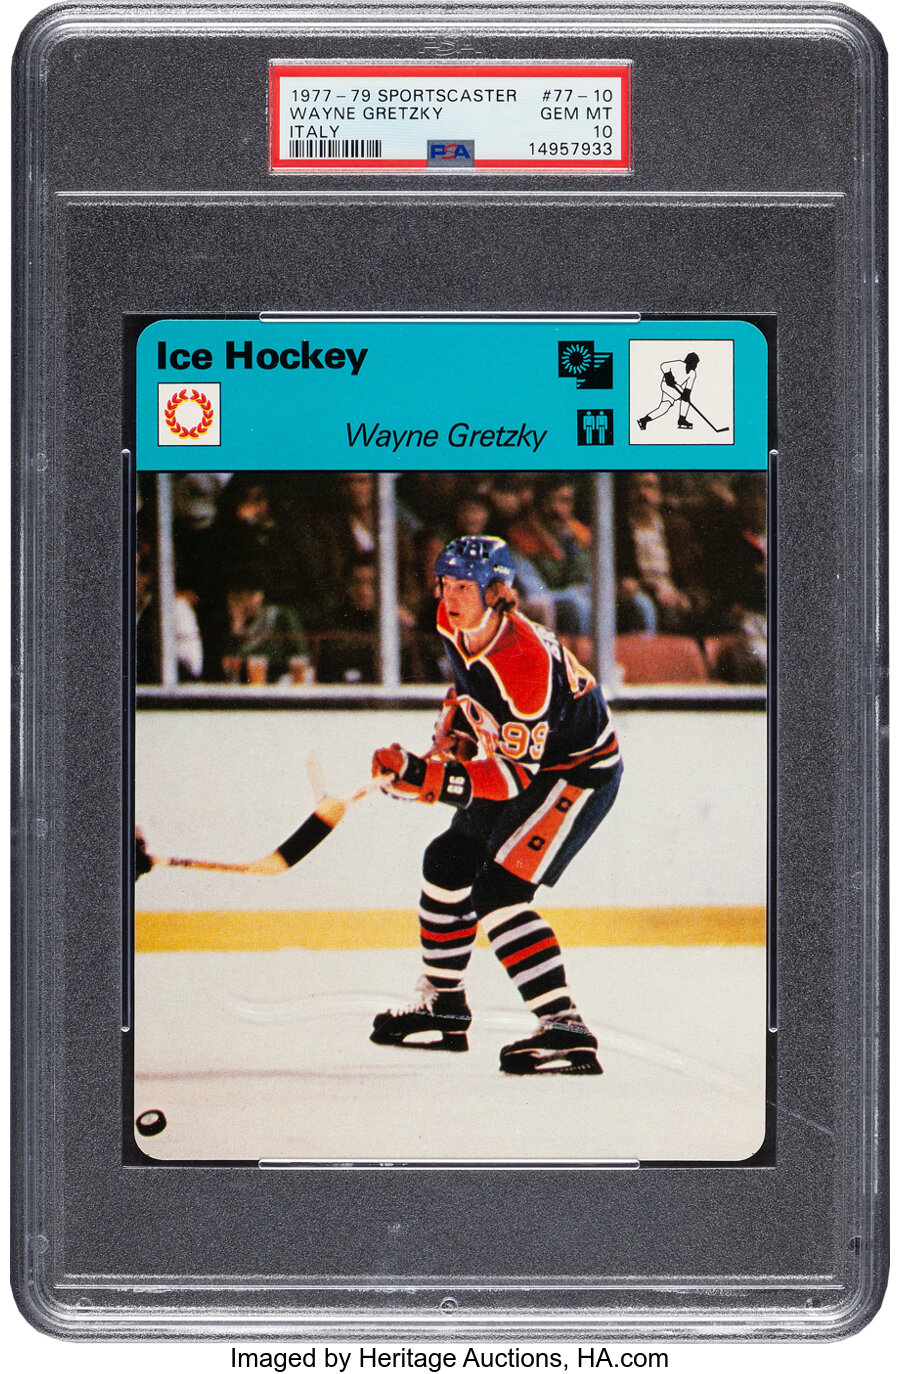 1977-79 Sportscaster Wayne Gretzky #77-10 PSA Gem Mint 10